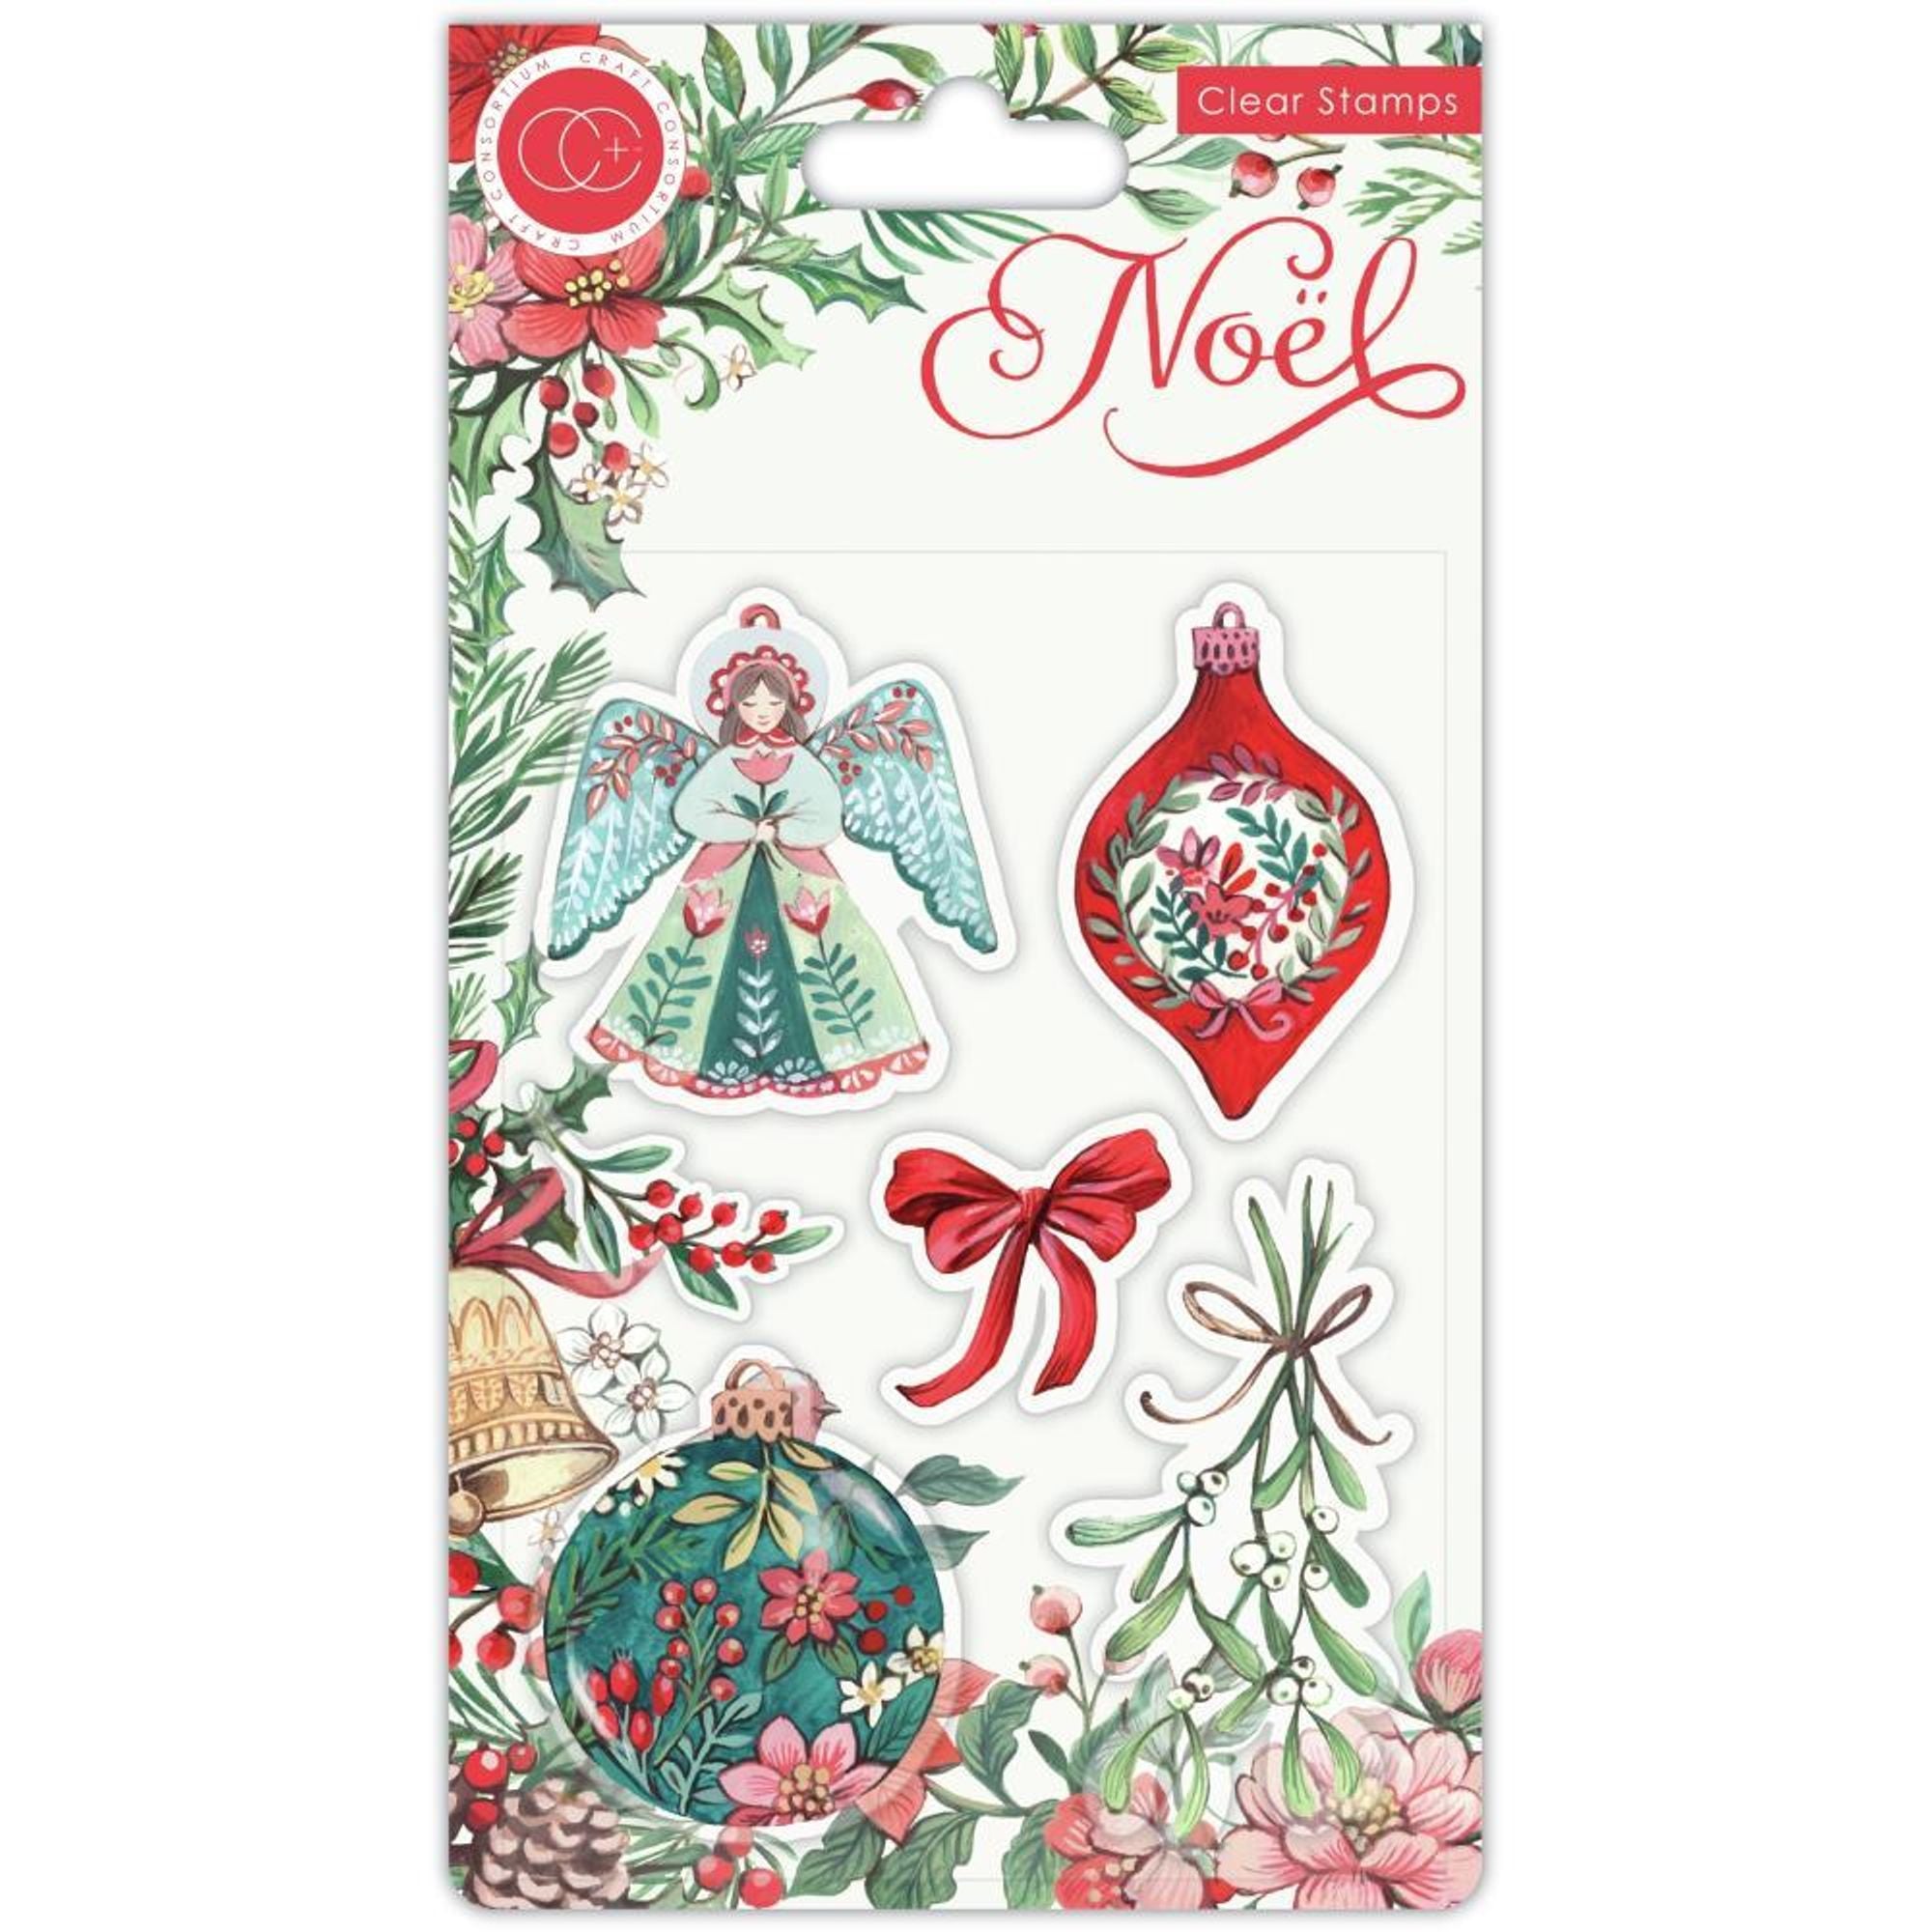 Noel Stamp Set - Decorations